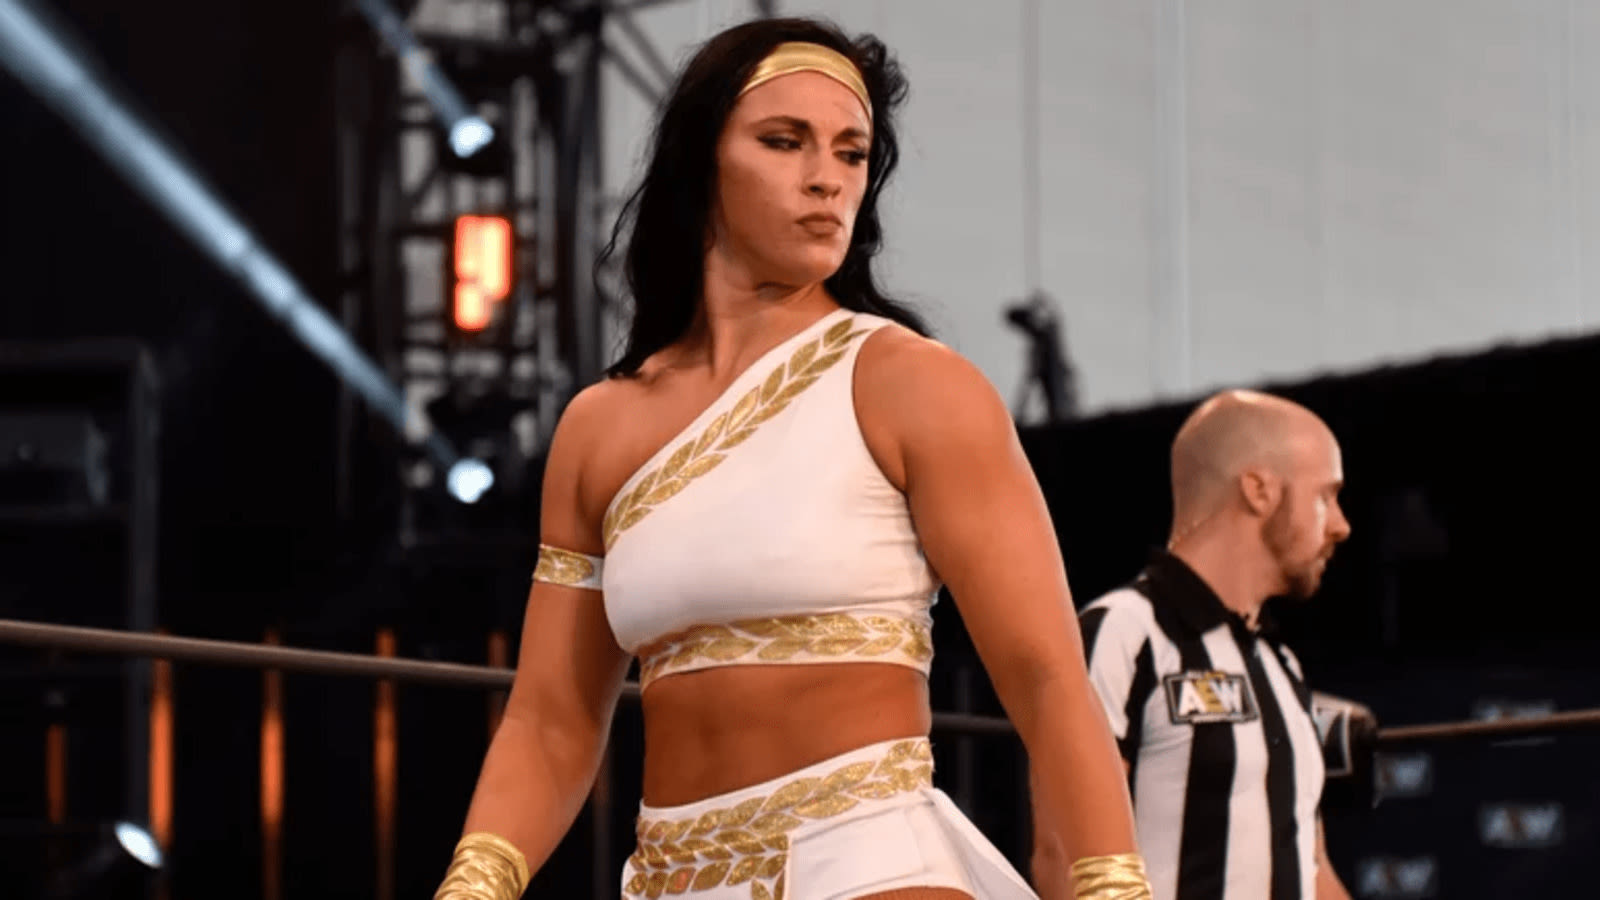 Backstage Update On Status Of Long-Absent AEW Dark Performer Megan Bayne - Wrestling Inc.